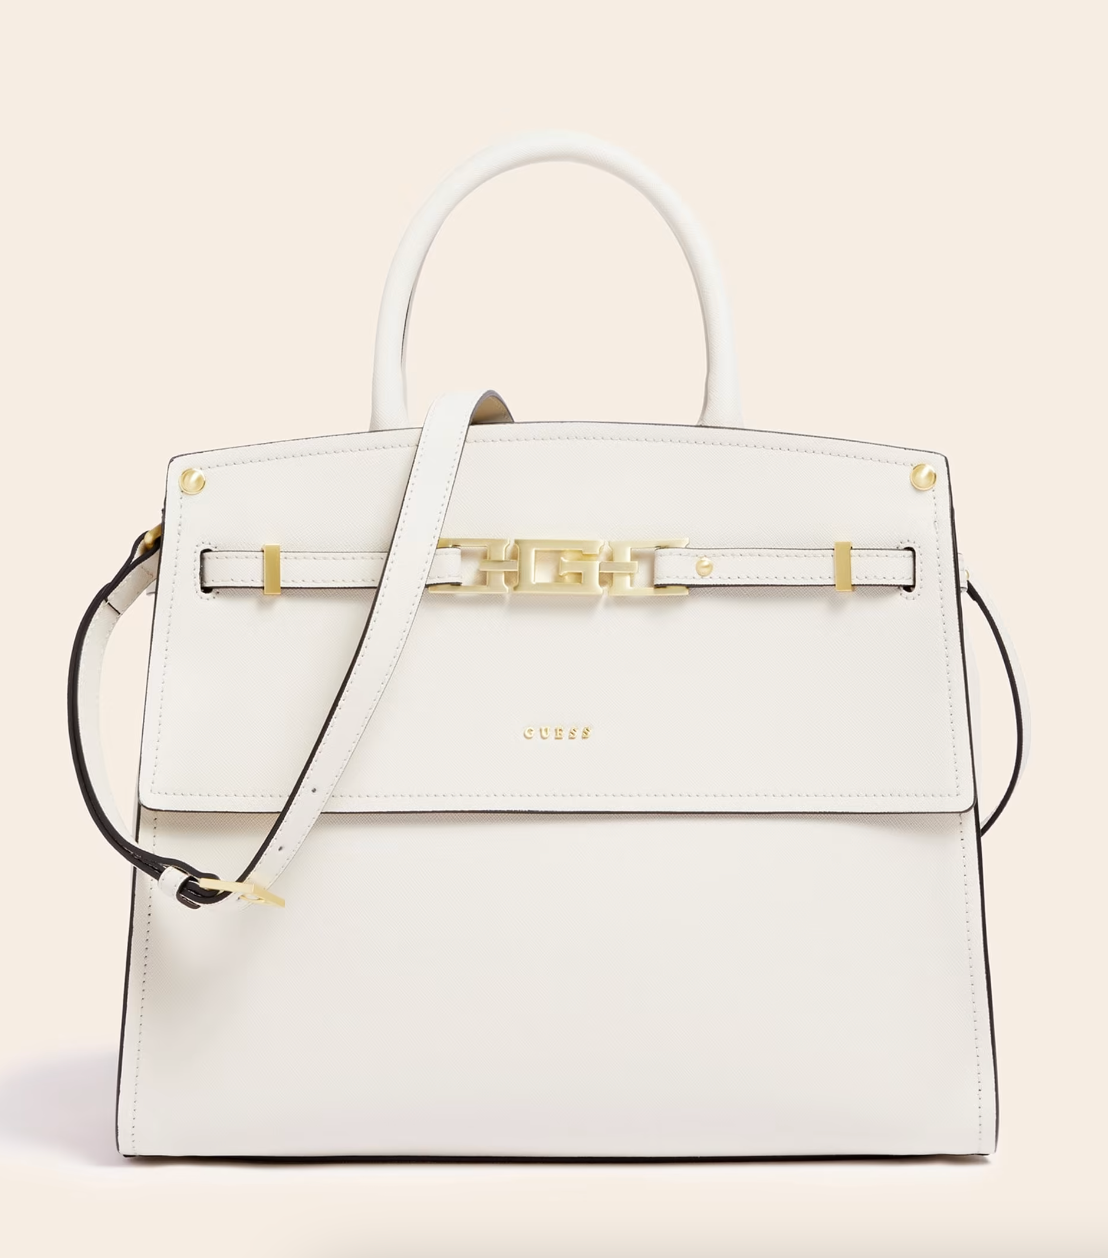 Can You Buy A Hermes Birkin Bag? Know Why Jane Birkin Inspired